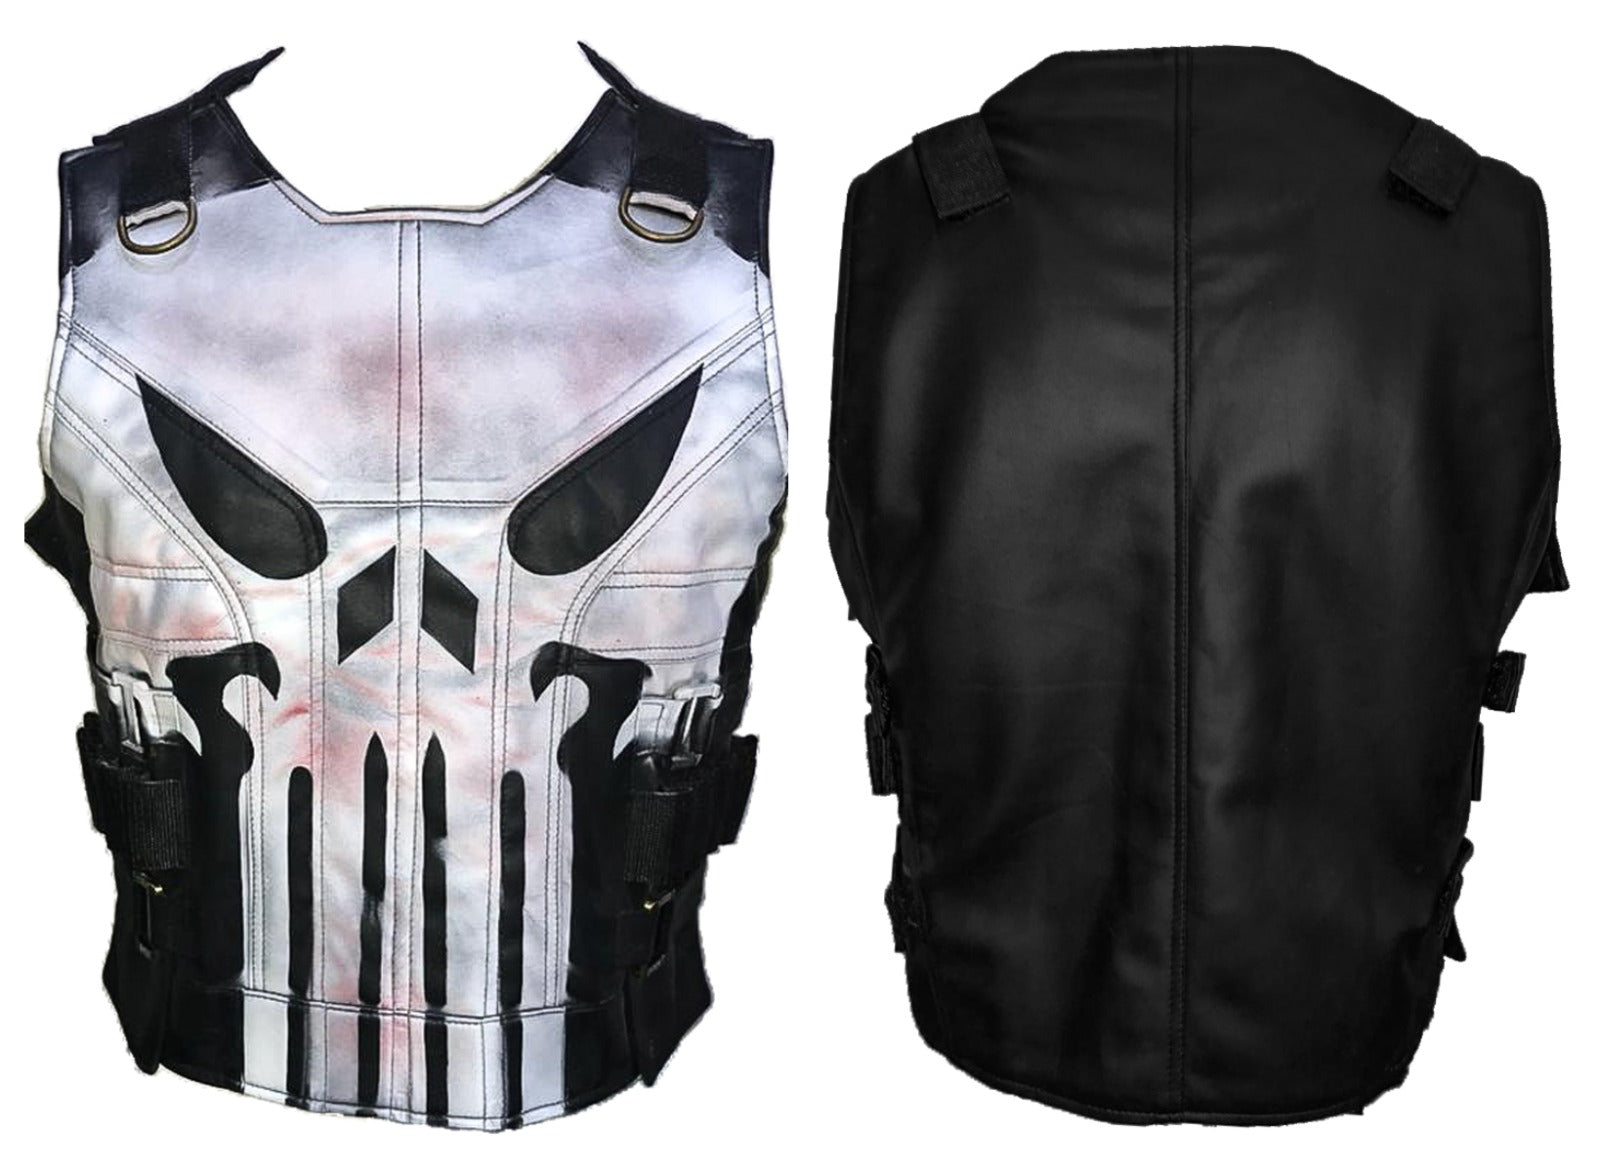 Powerful Men's Black Leather Punisher Vest - John Bernthal Season 2 Edition - Button Stitched